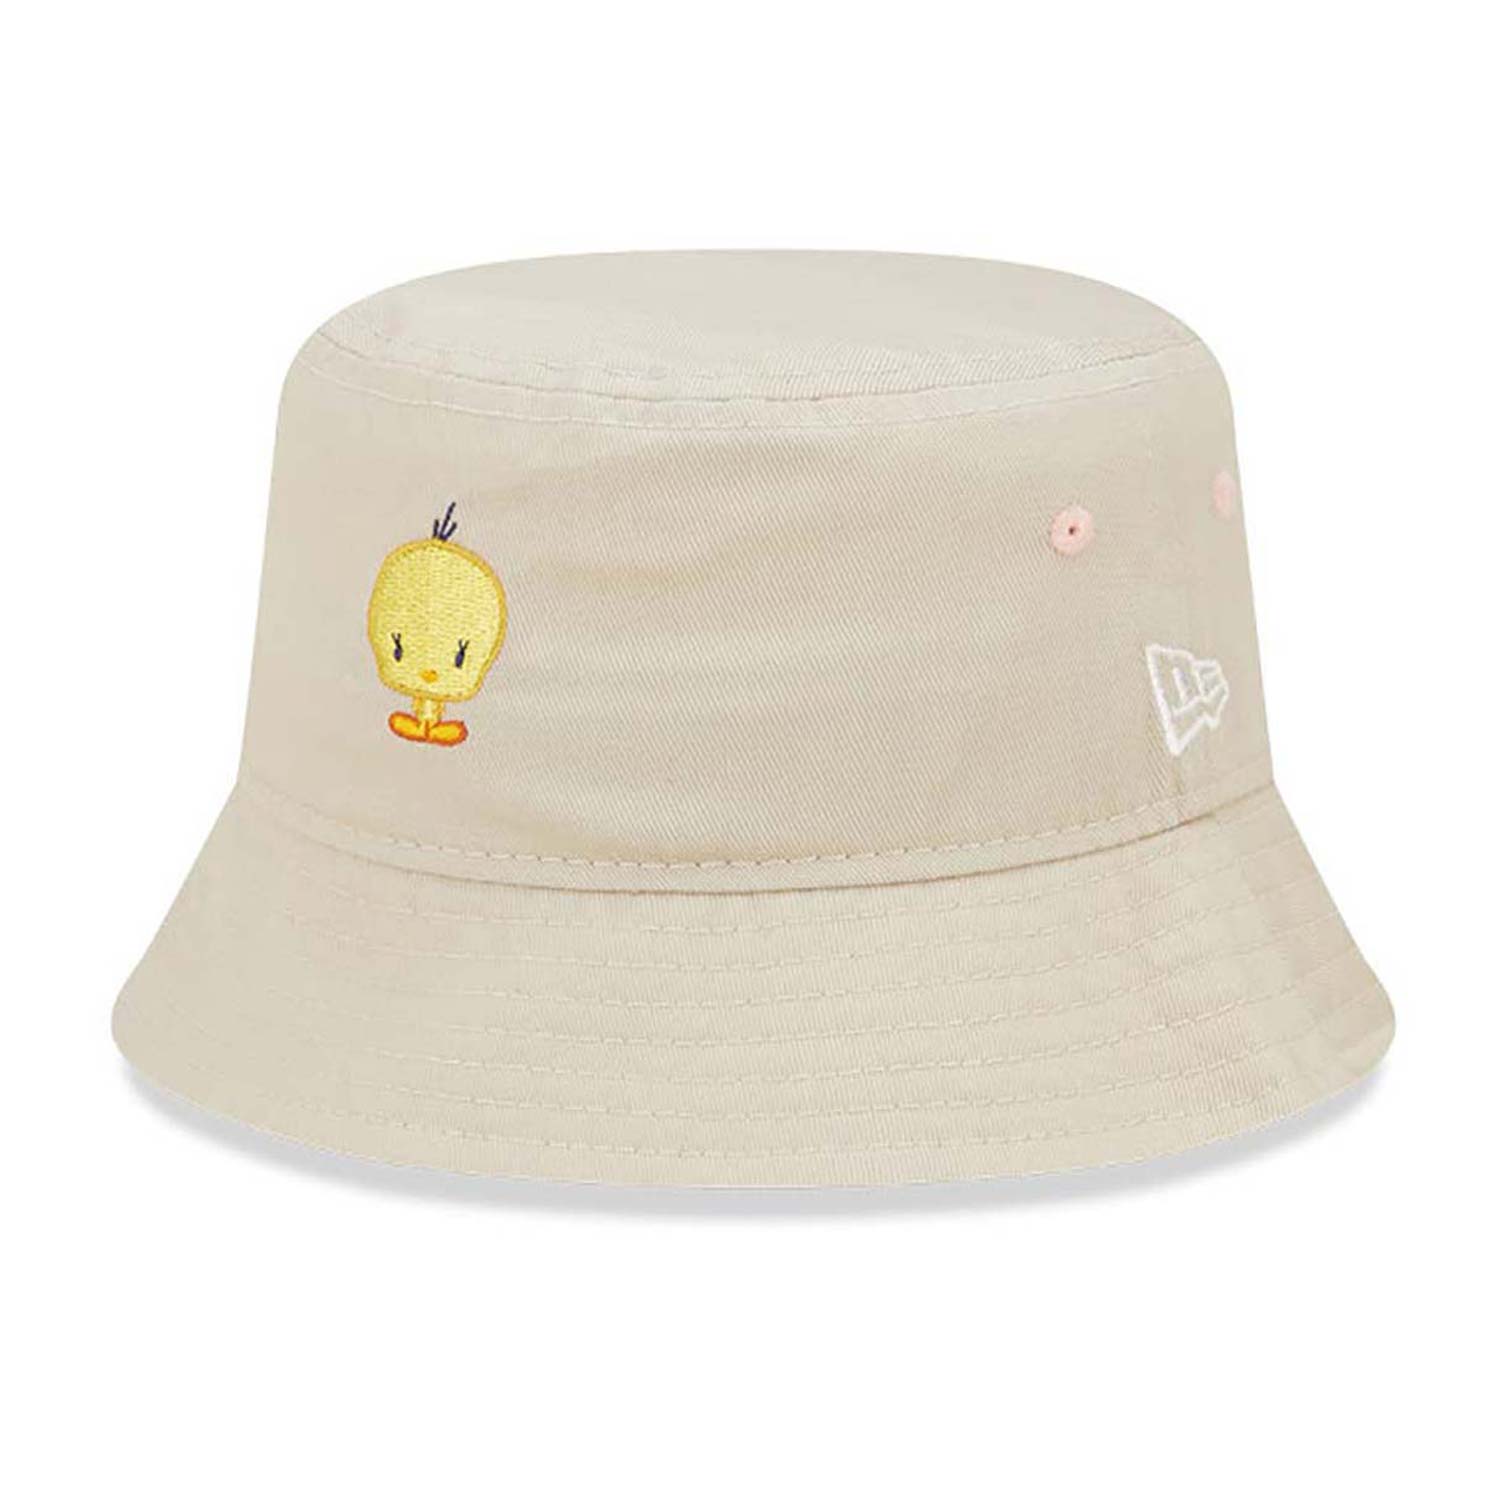 New Era bob enfant Bucket Hat kid "Looney Tunes Tweety bird" Cream